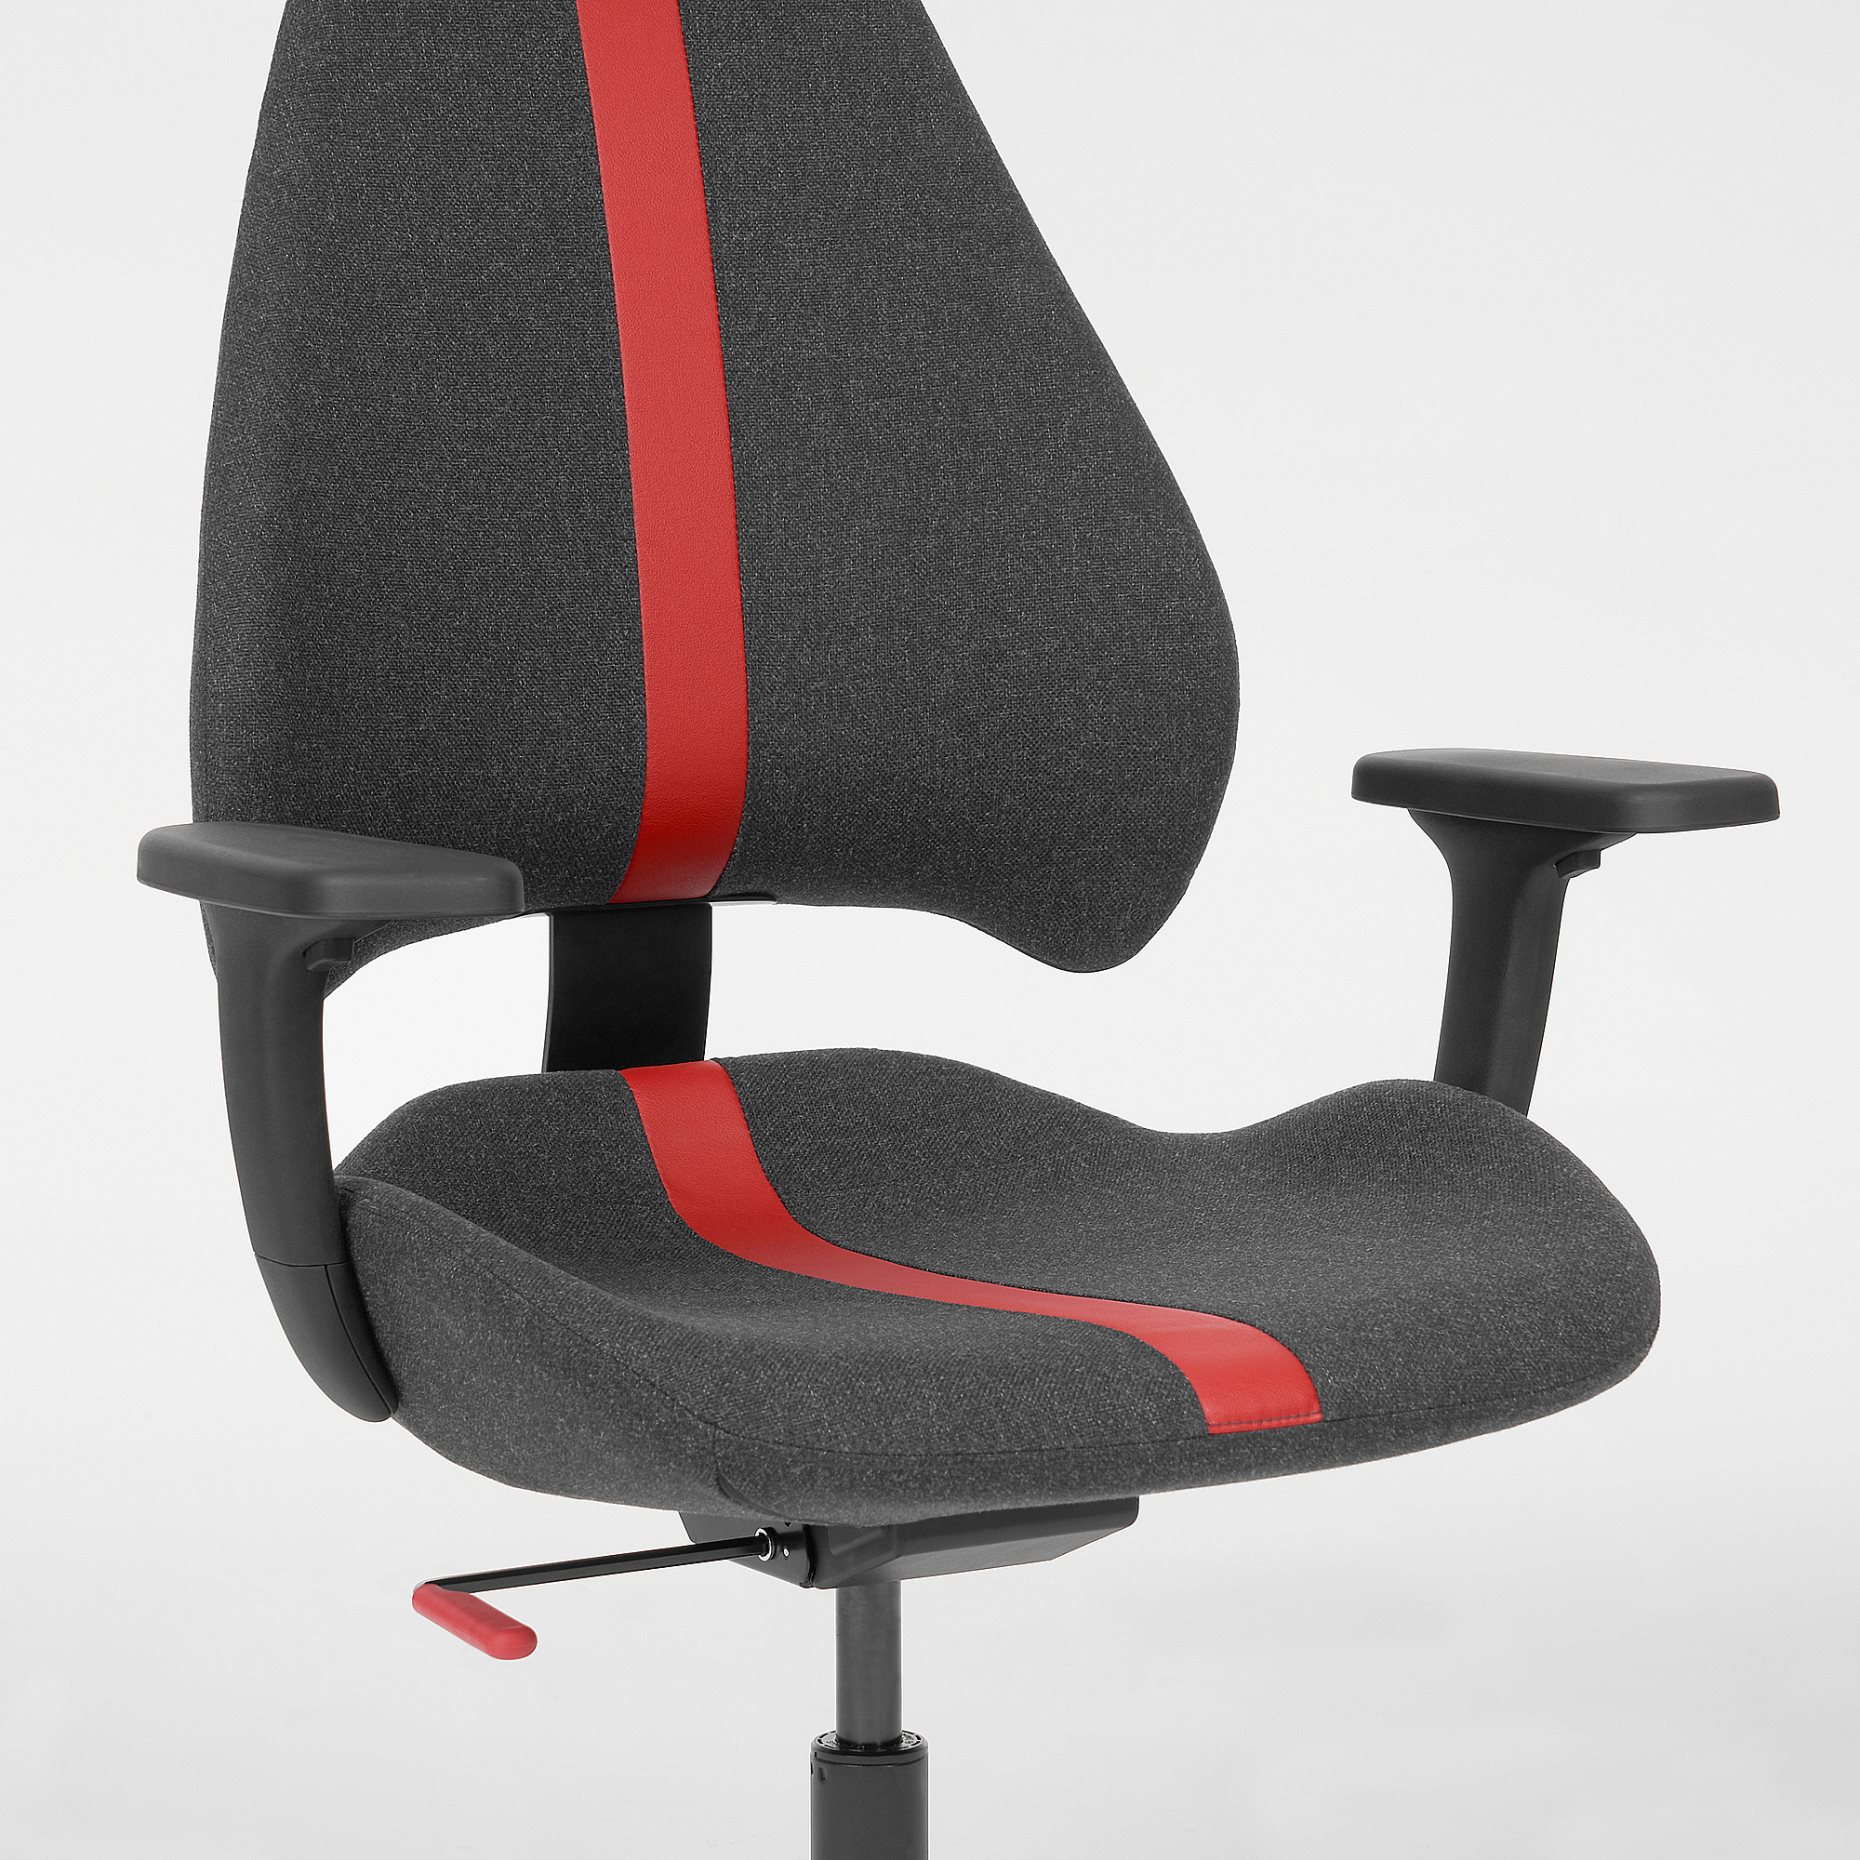 GRUPPSPEL, gaming chair, 105.075.84